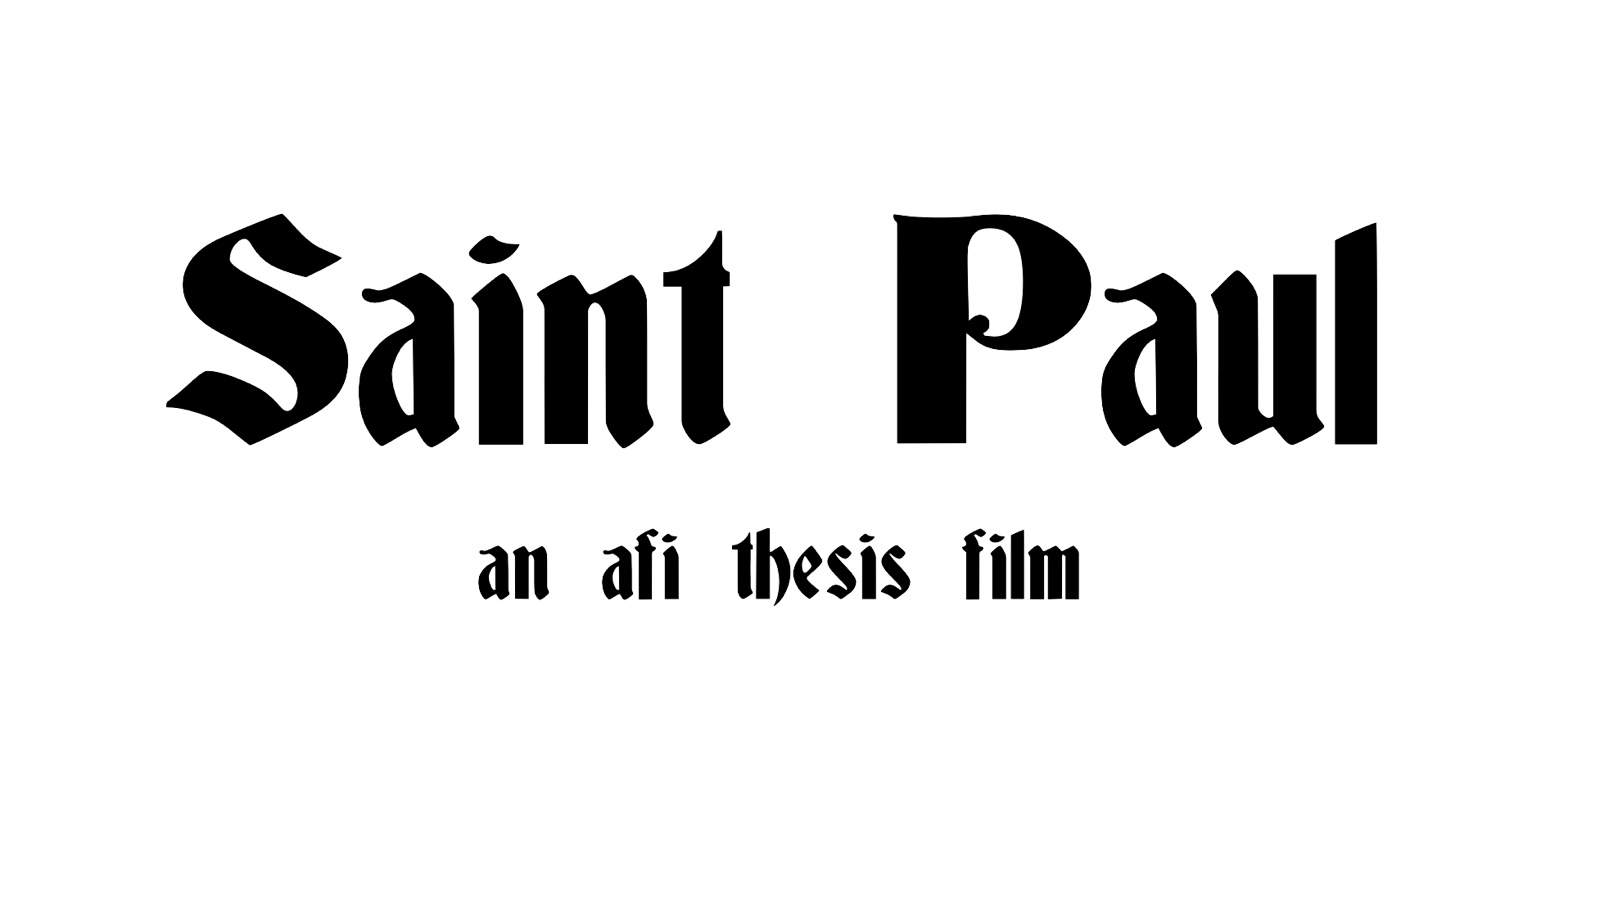 afi thesis film